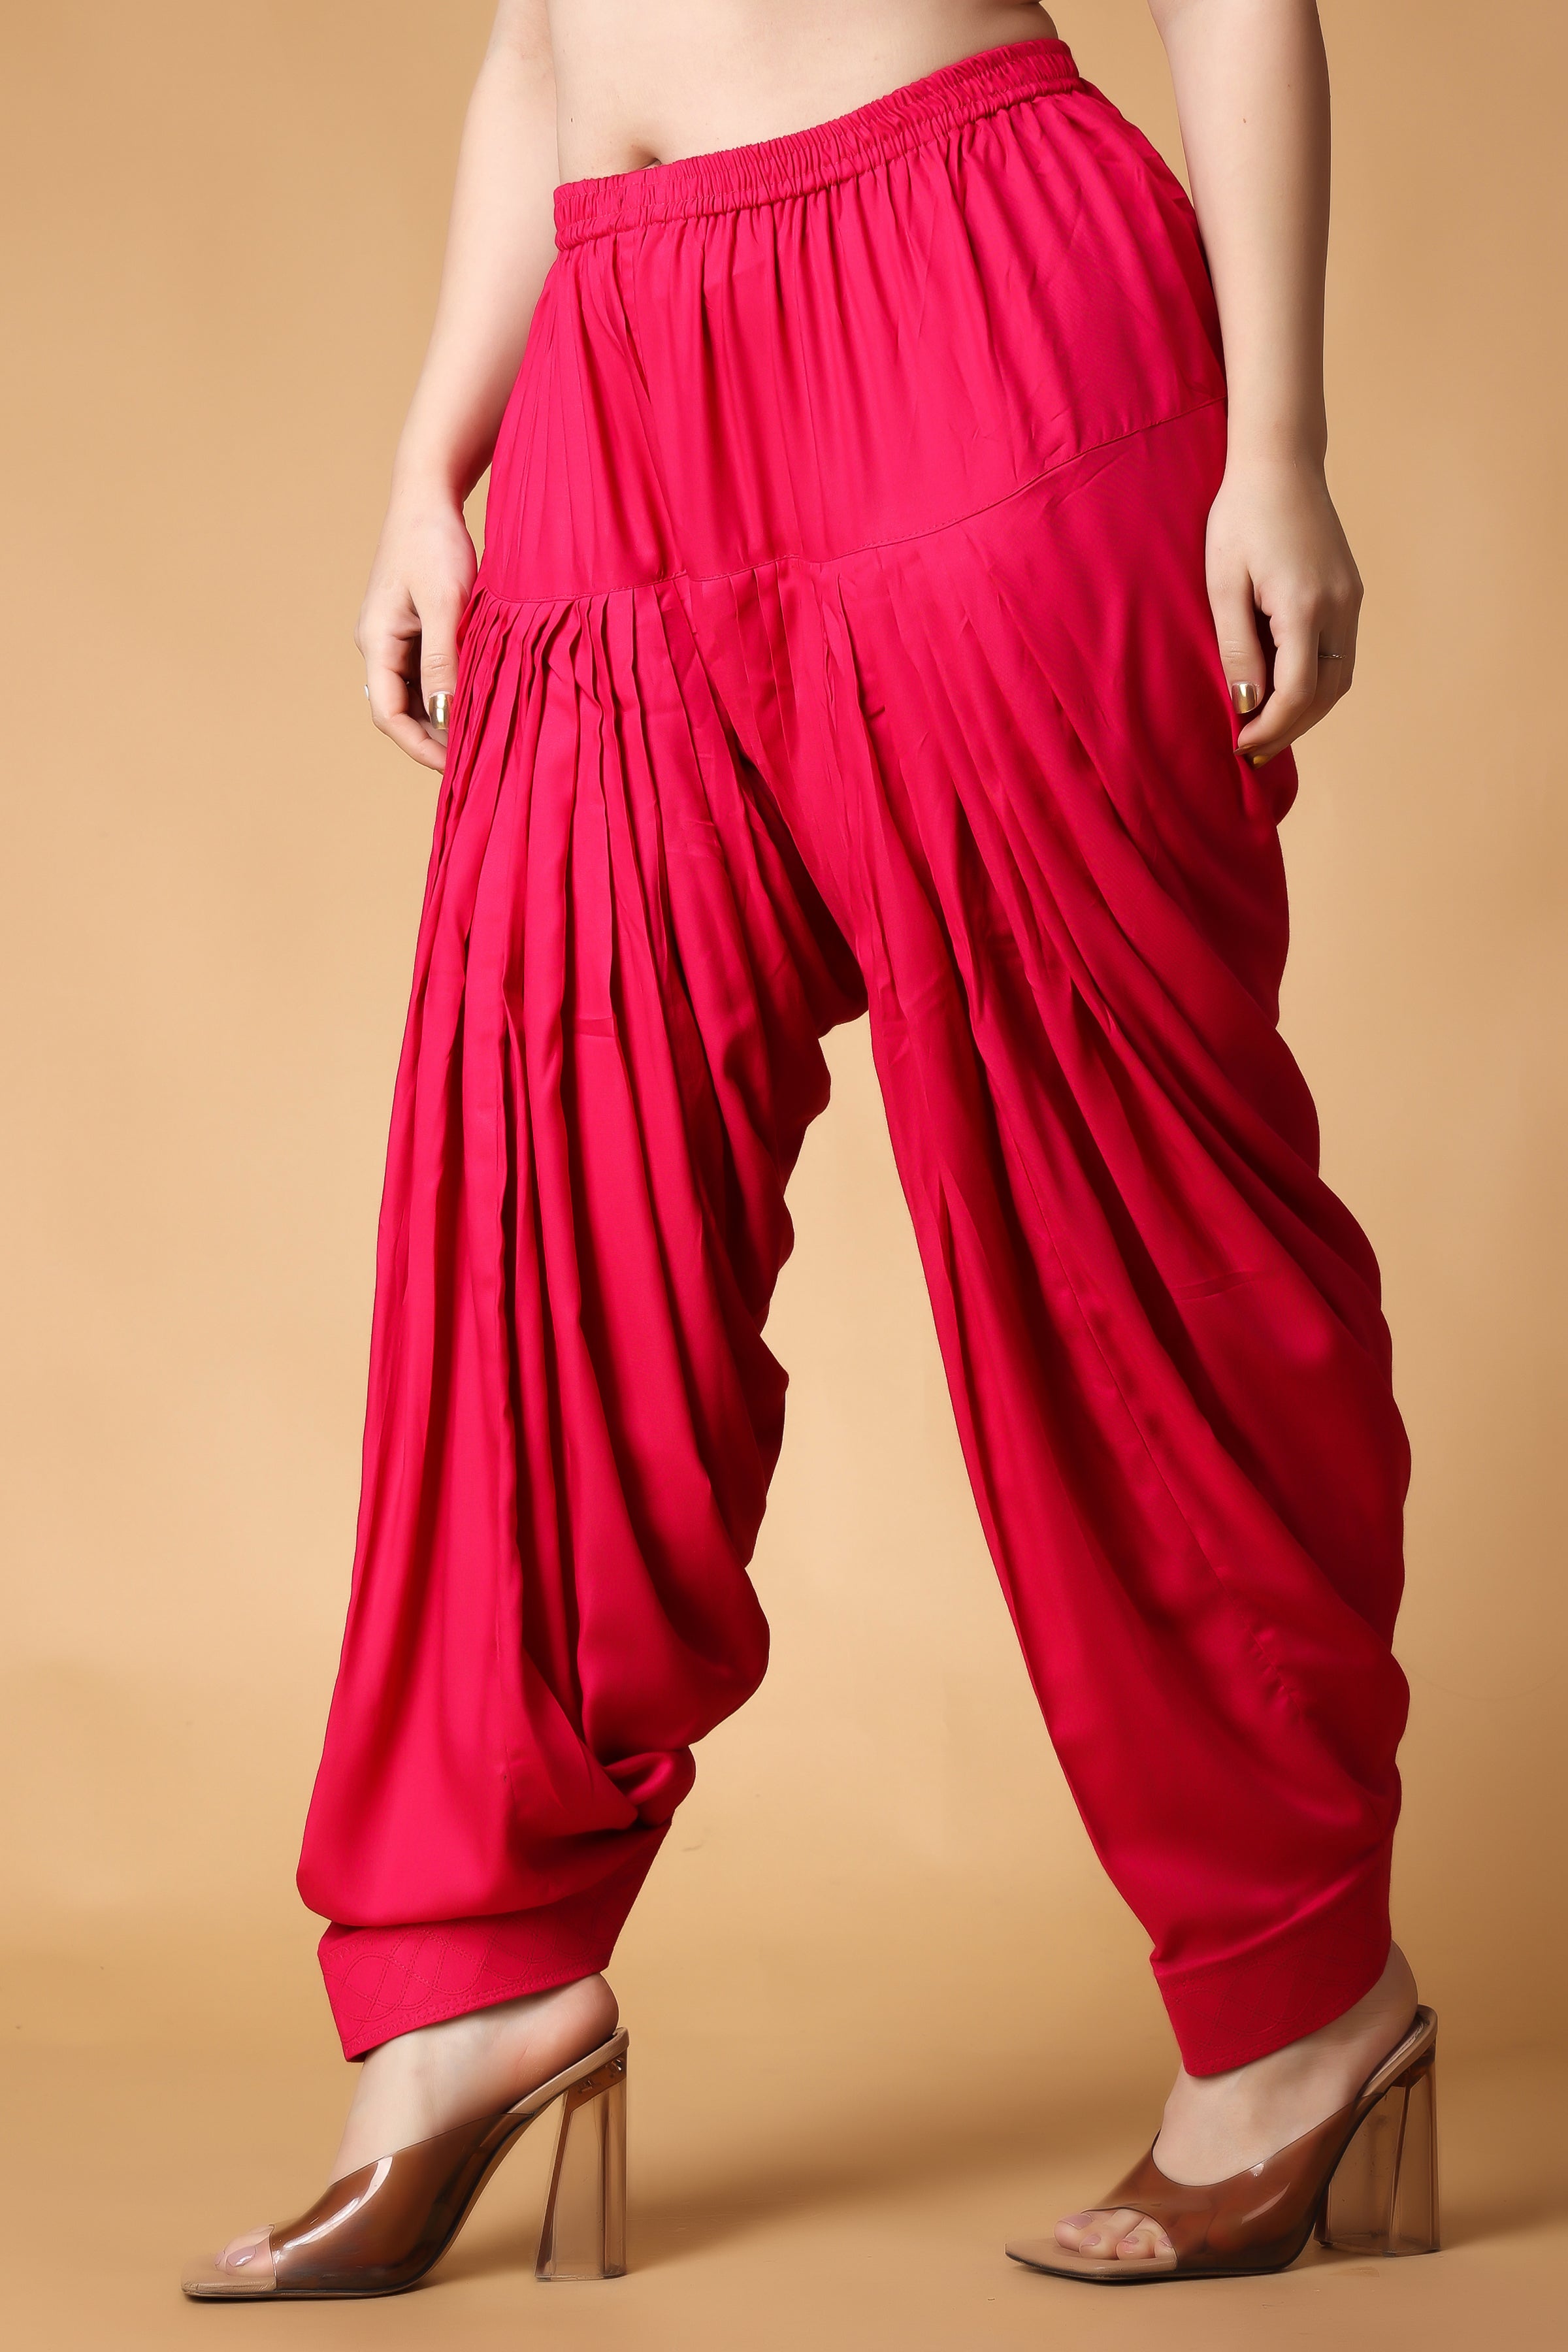 DIAMO Plain Patiala Salwar Pants Harem Pants Ethnic TrouserYoga Pants  Free StylePACK OF 2